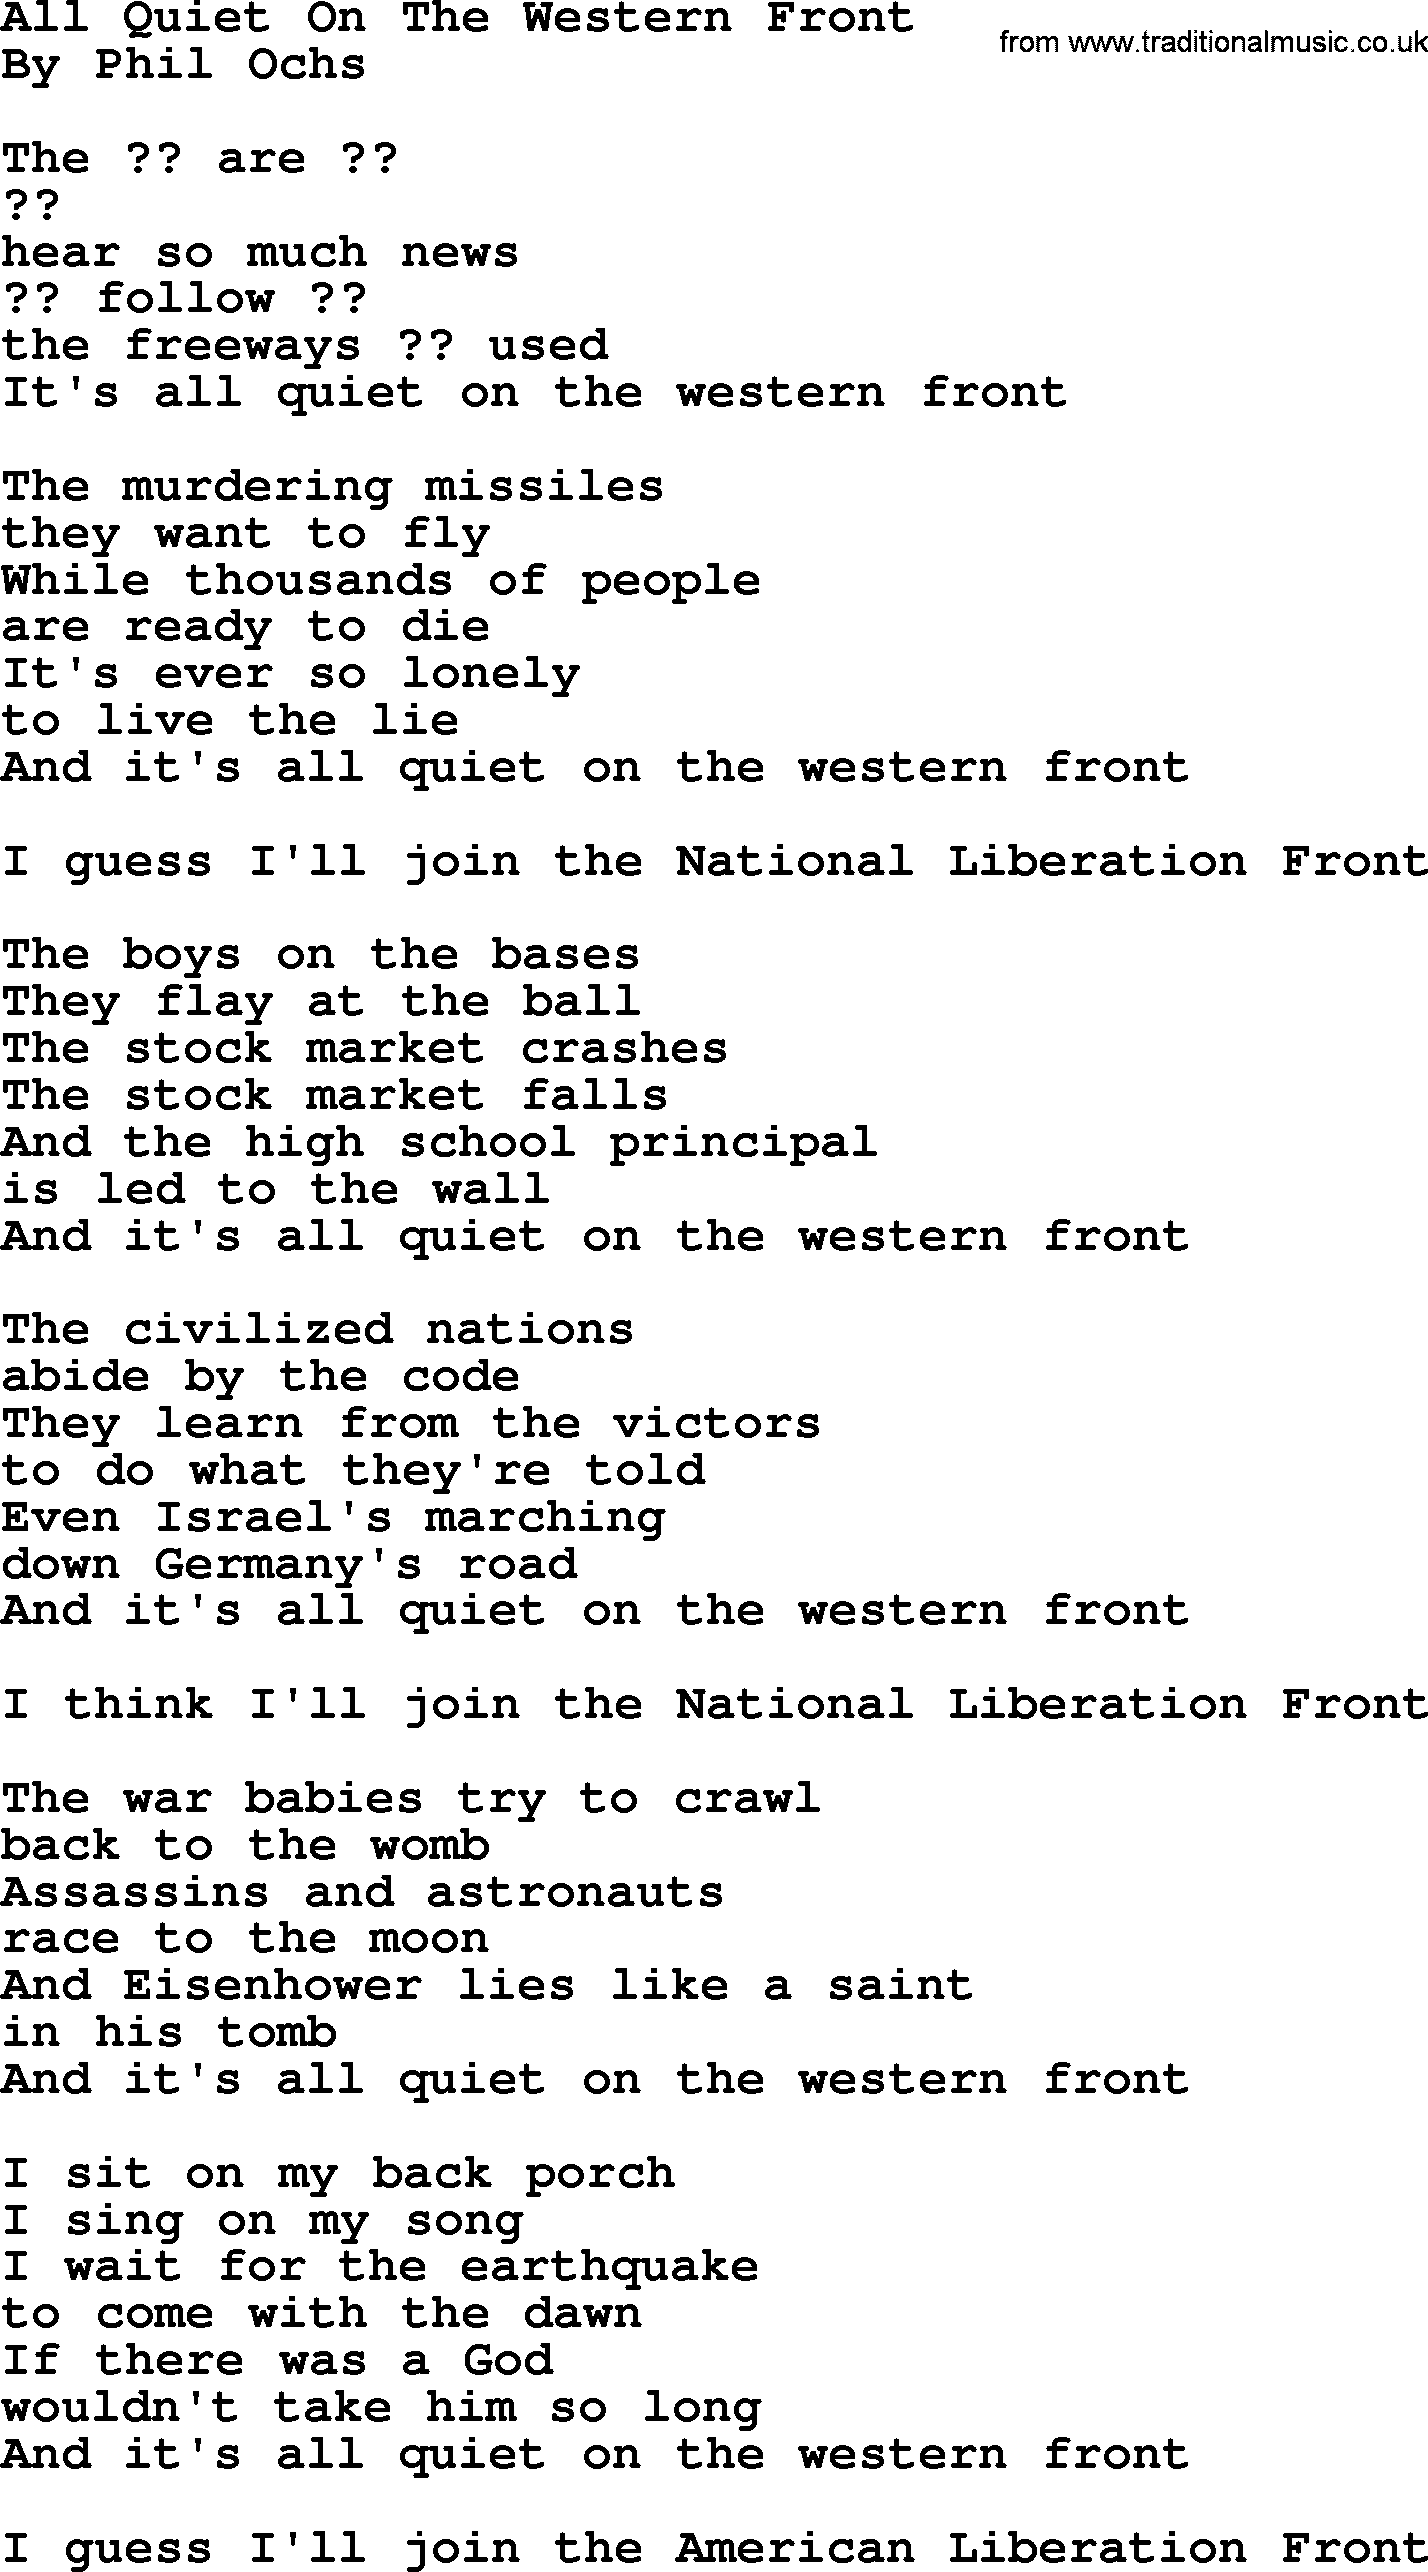 Phil Ochs song All Quiet On The Western Front, lyrics